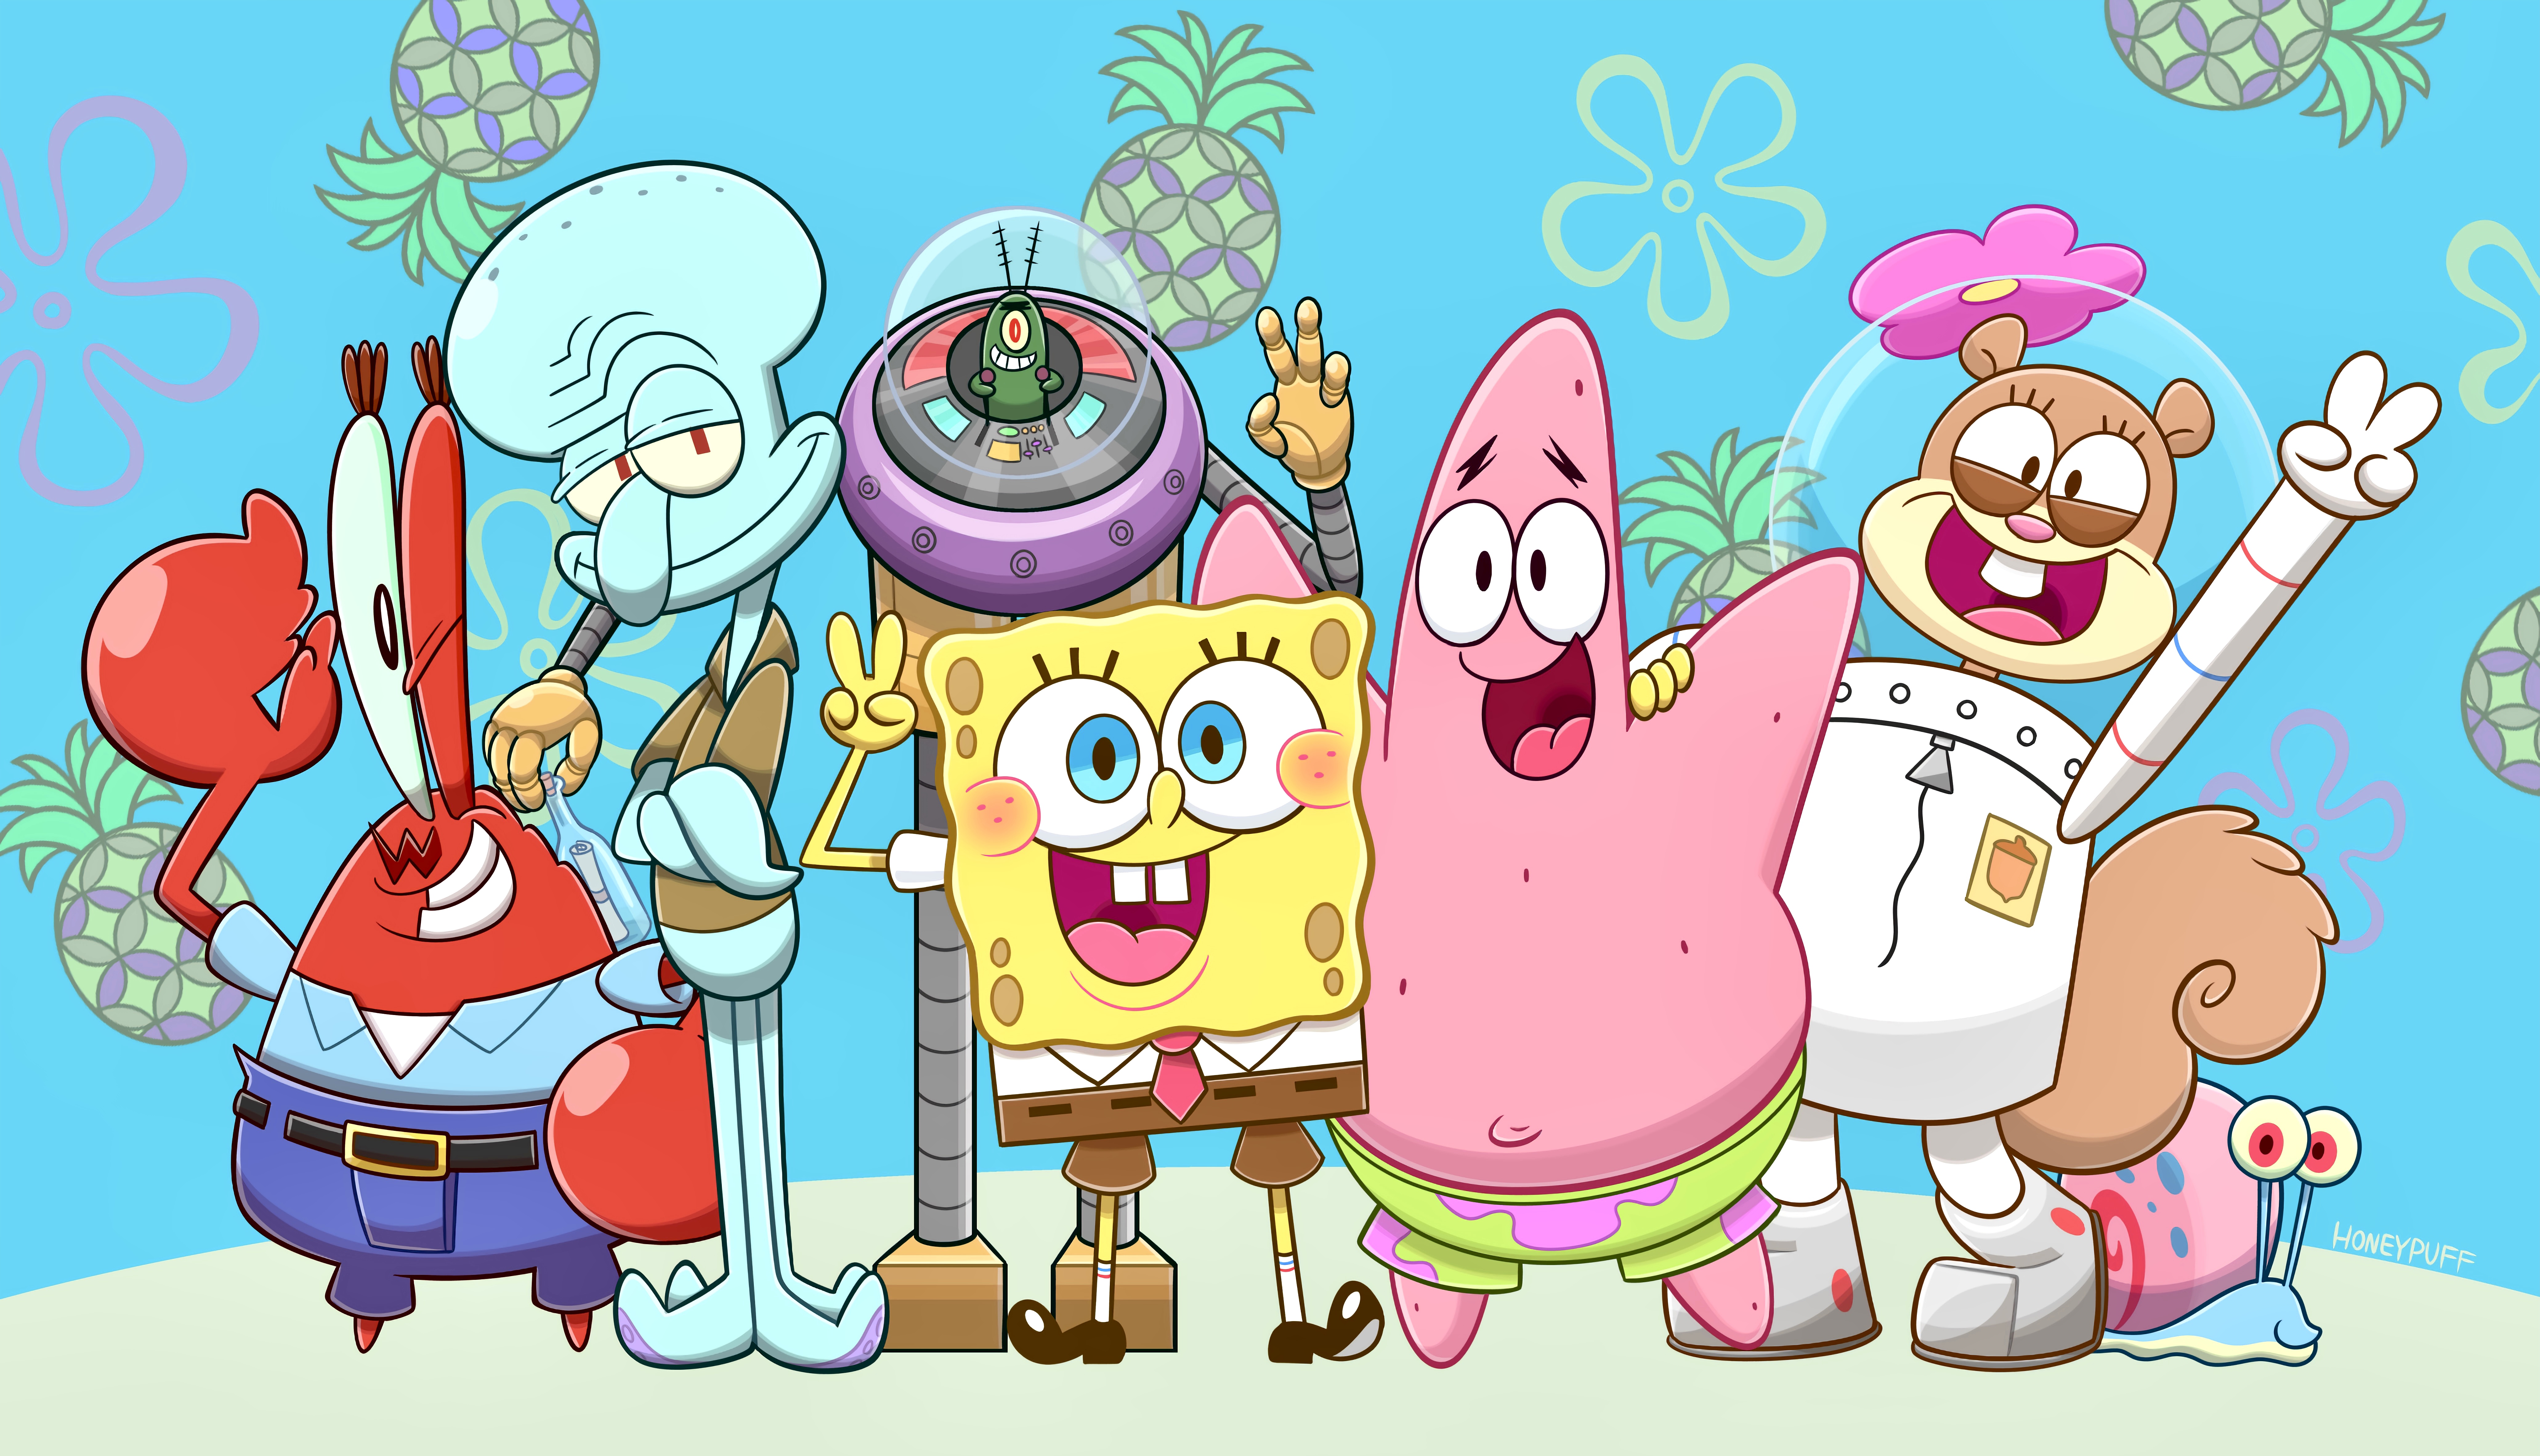 Spongebob Cartoon Patrick Spongebob Squarepants Sandy Cheeks Squidward Tentacles Sheldon Plankton 8248x4728